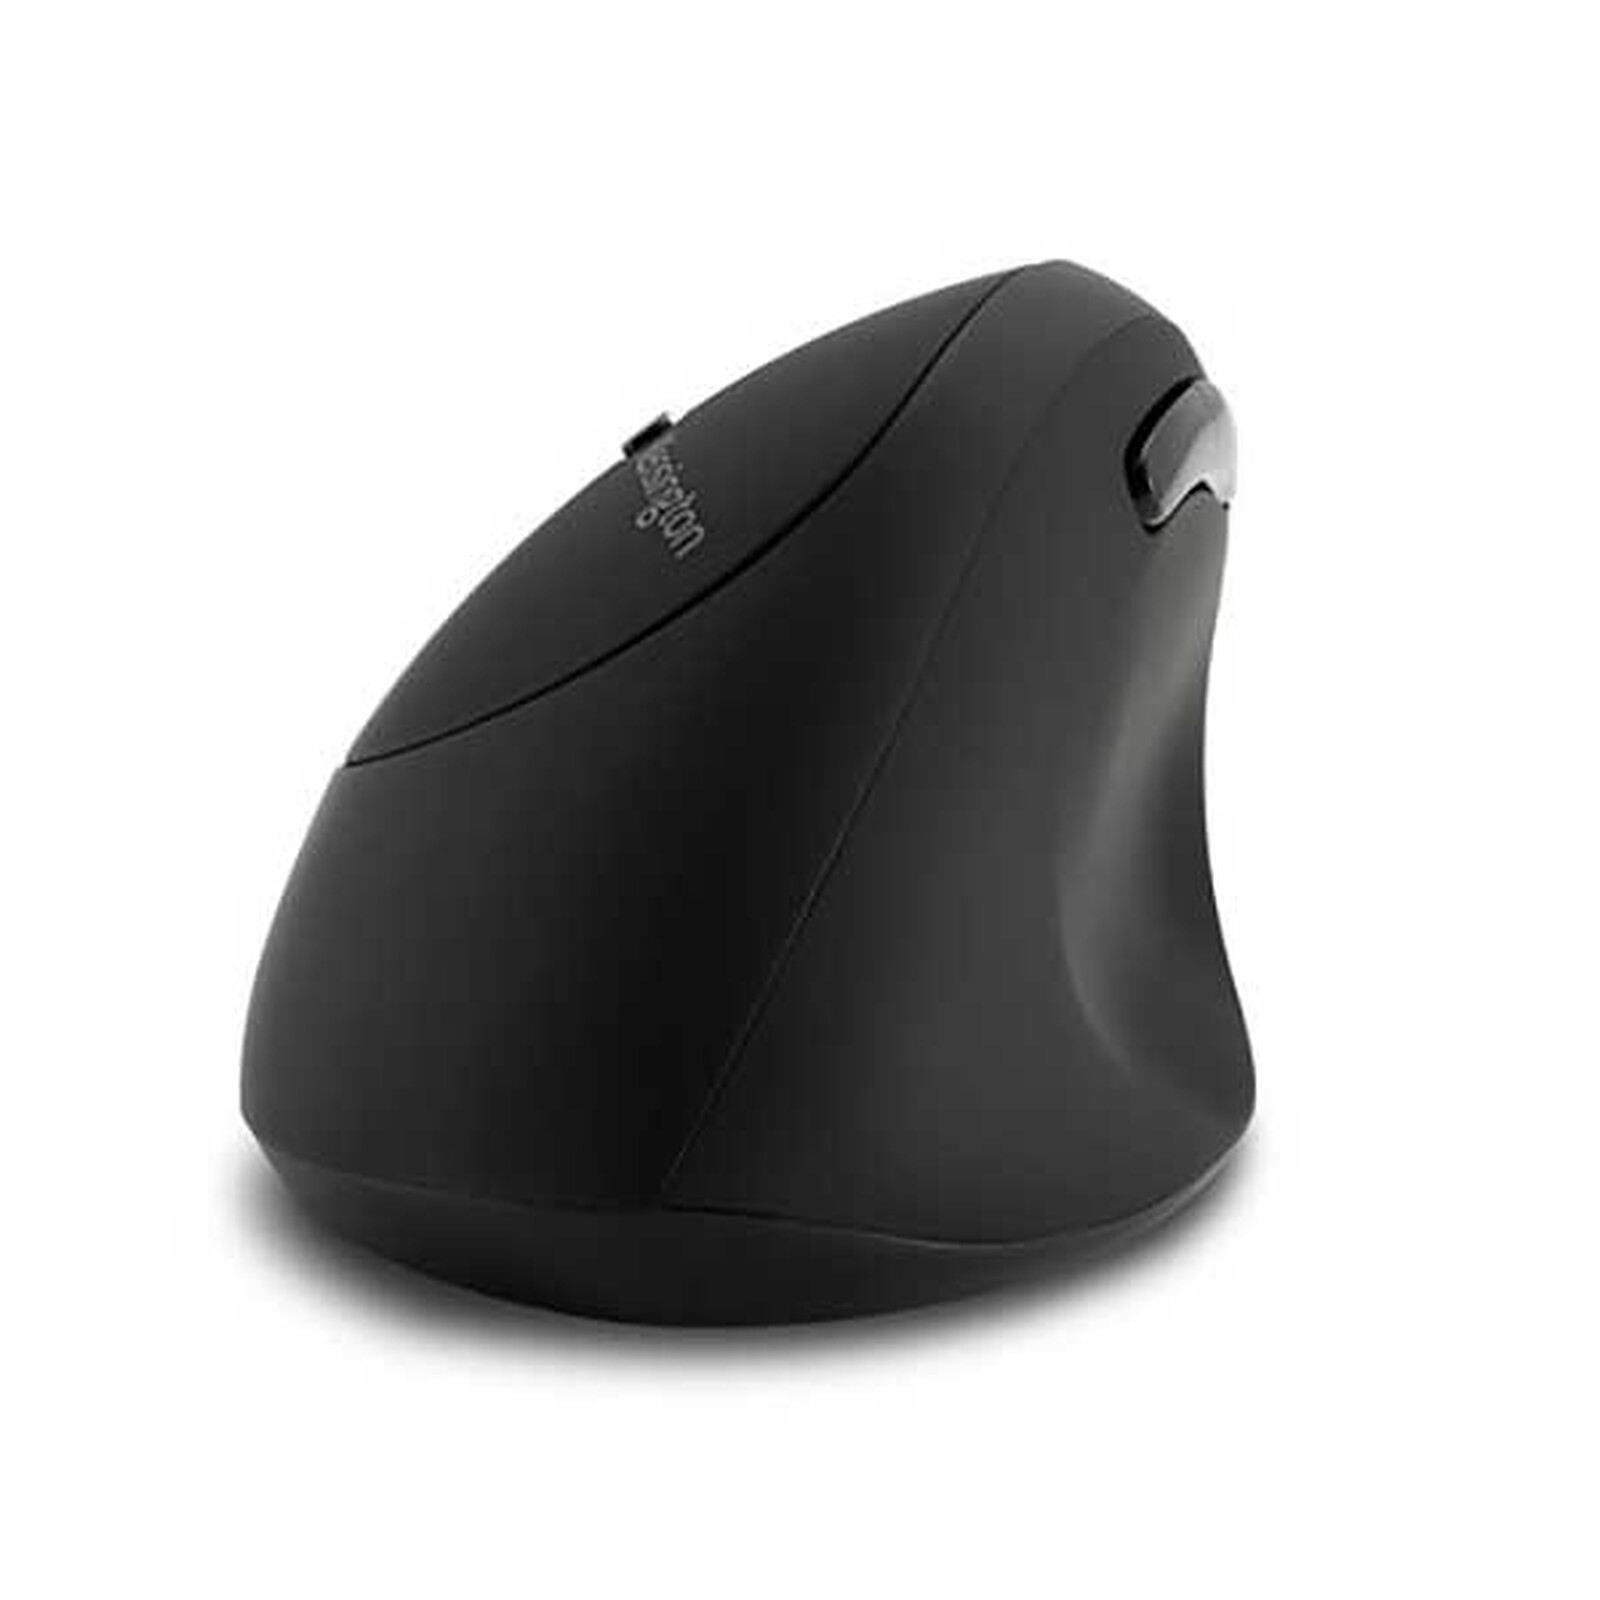 Kensington Pro Fit Wireless Mouse ergonomico per mancini